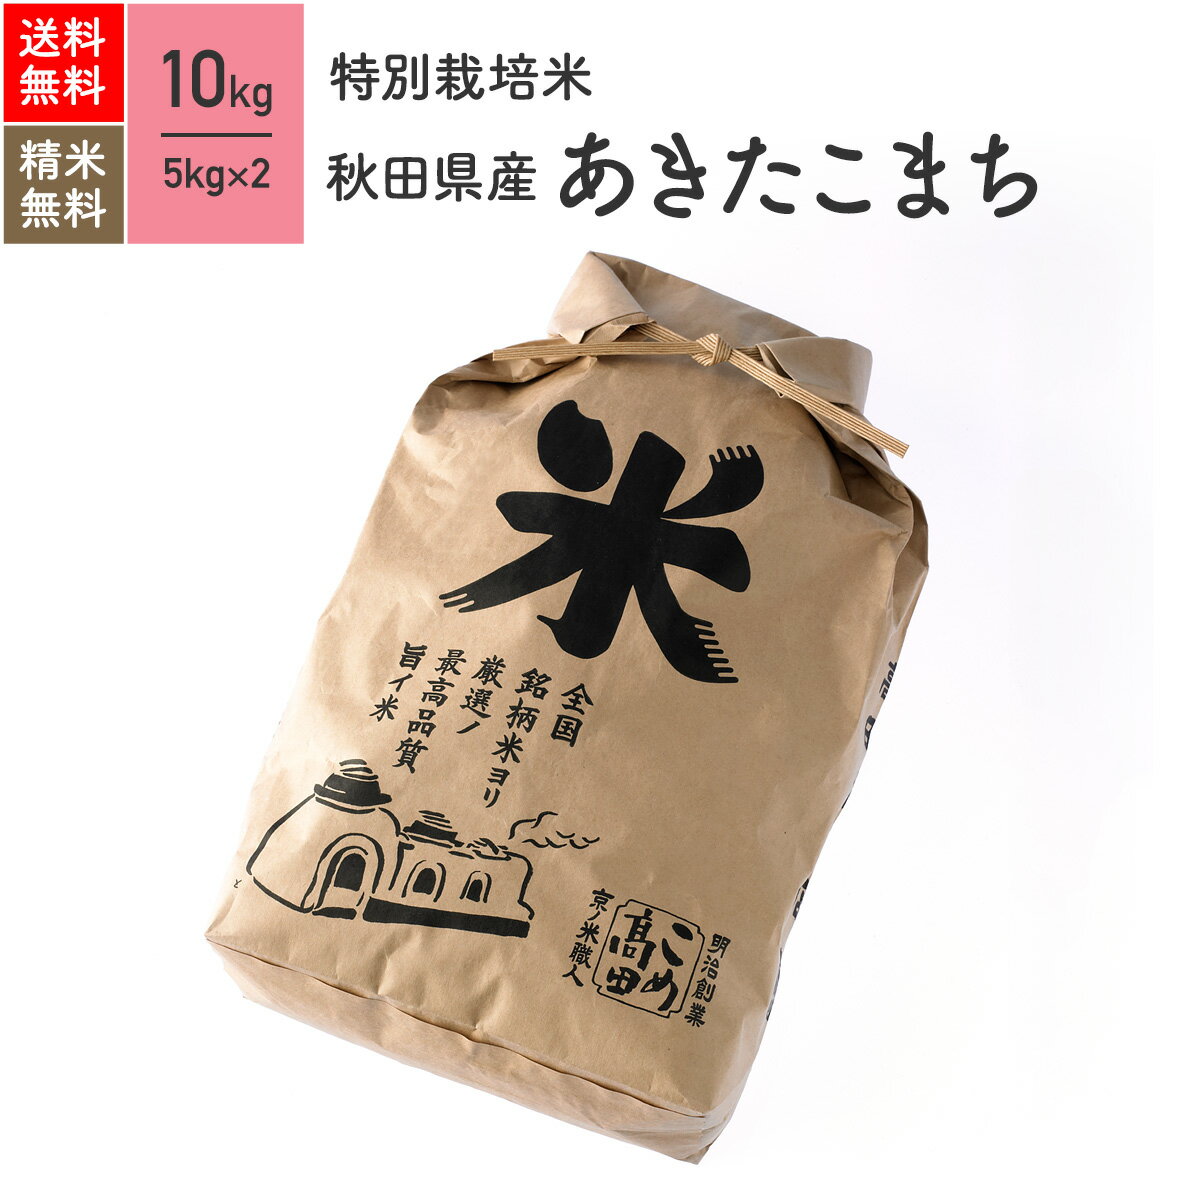 10kg あきたこまち 秋田県産 特別栽培米 令和5年産 送